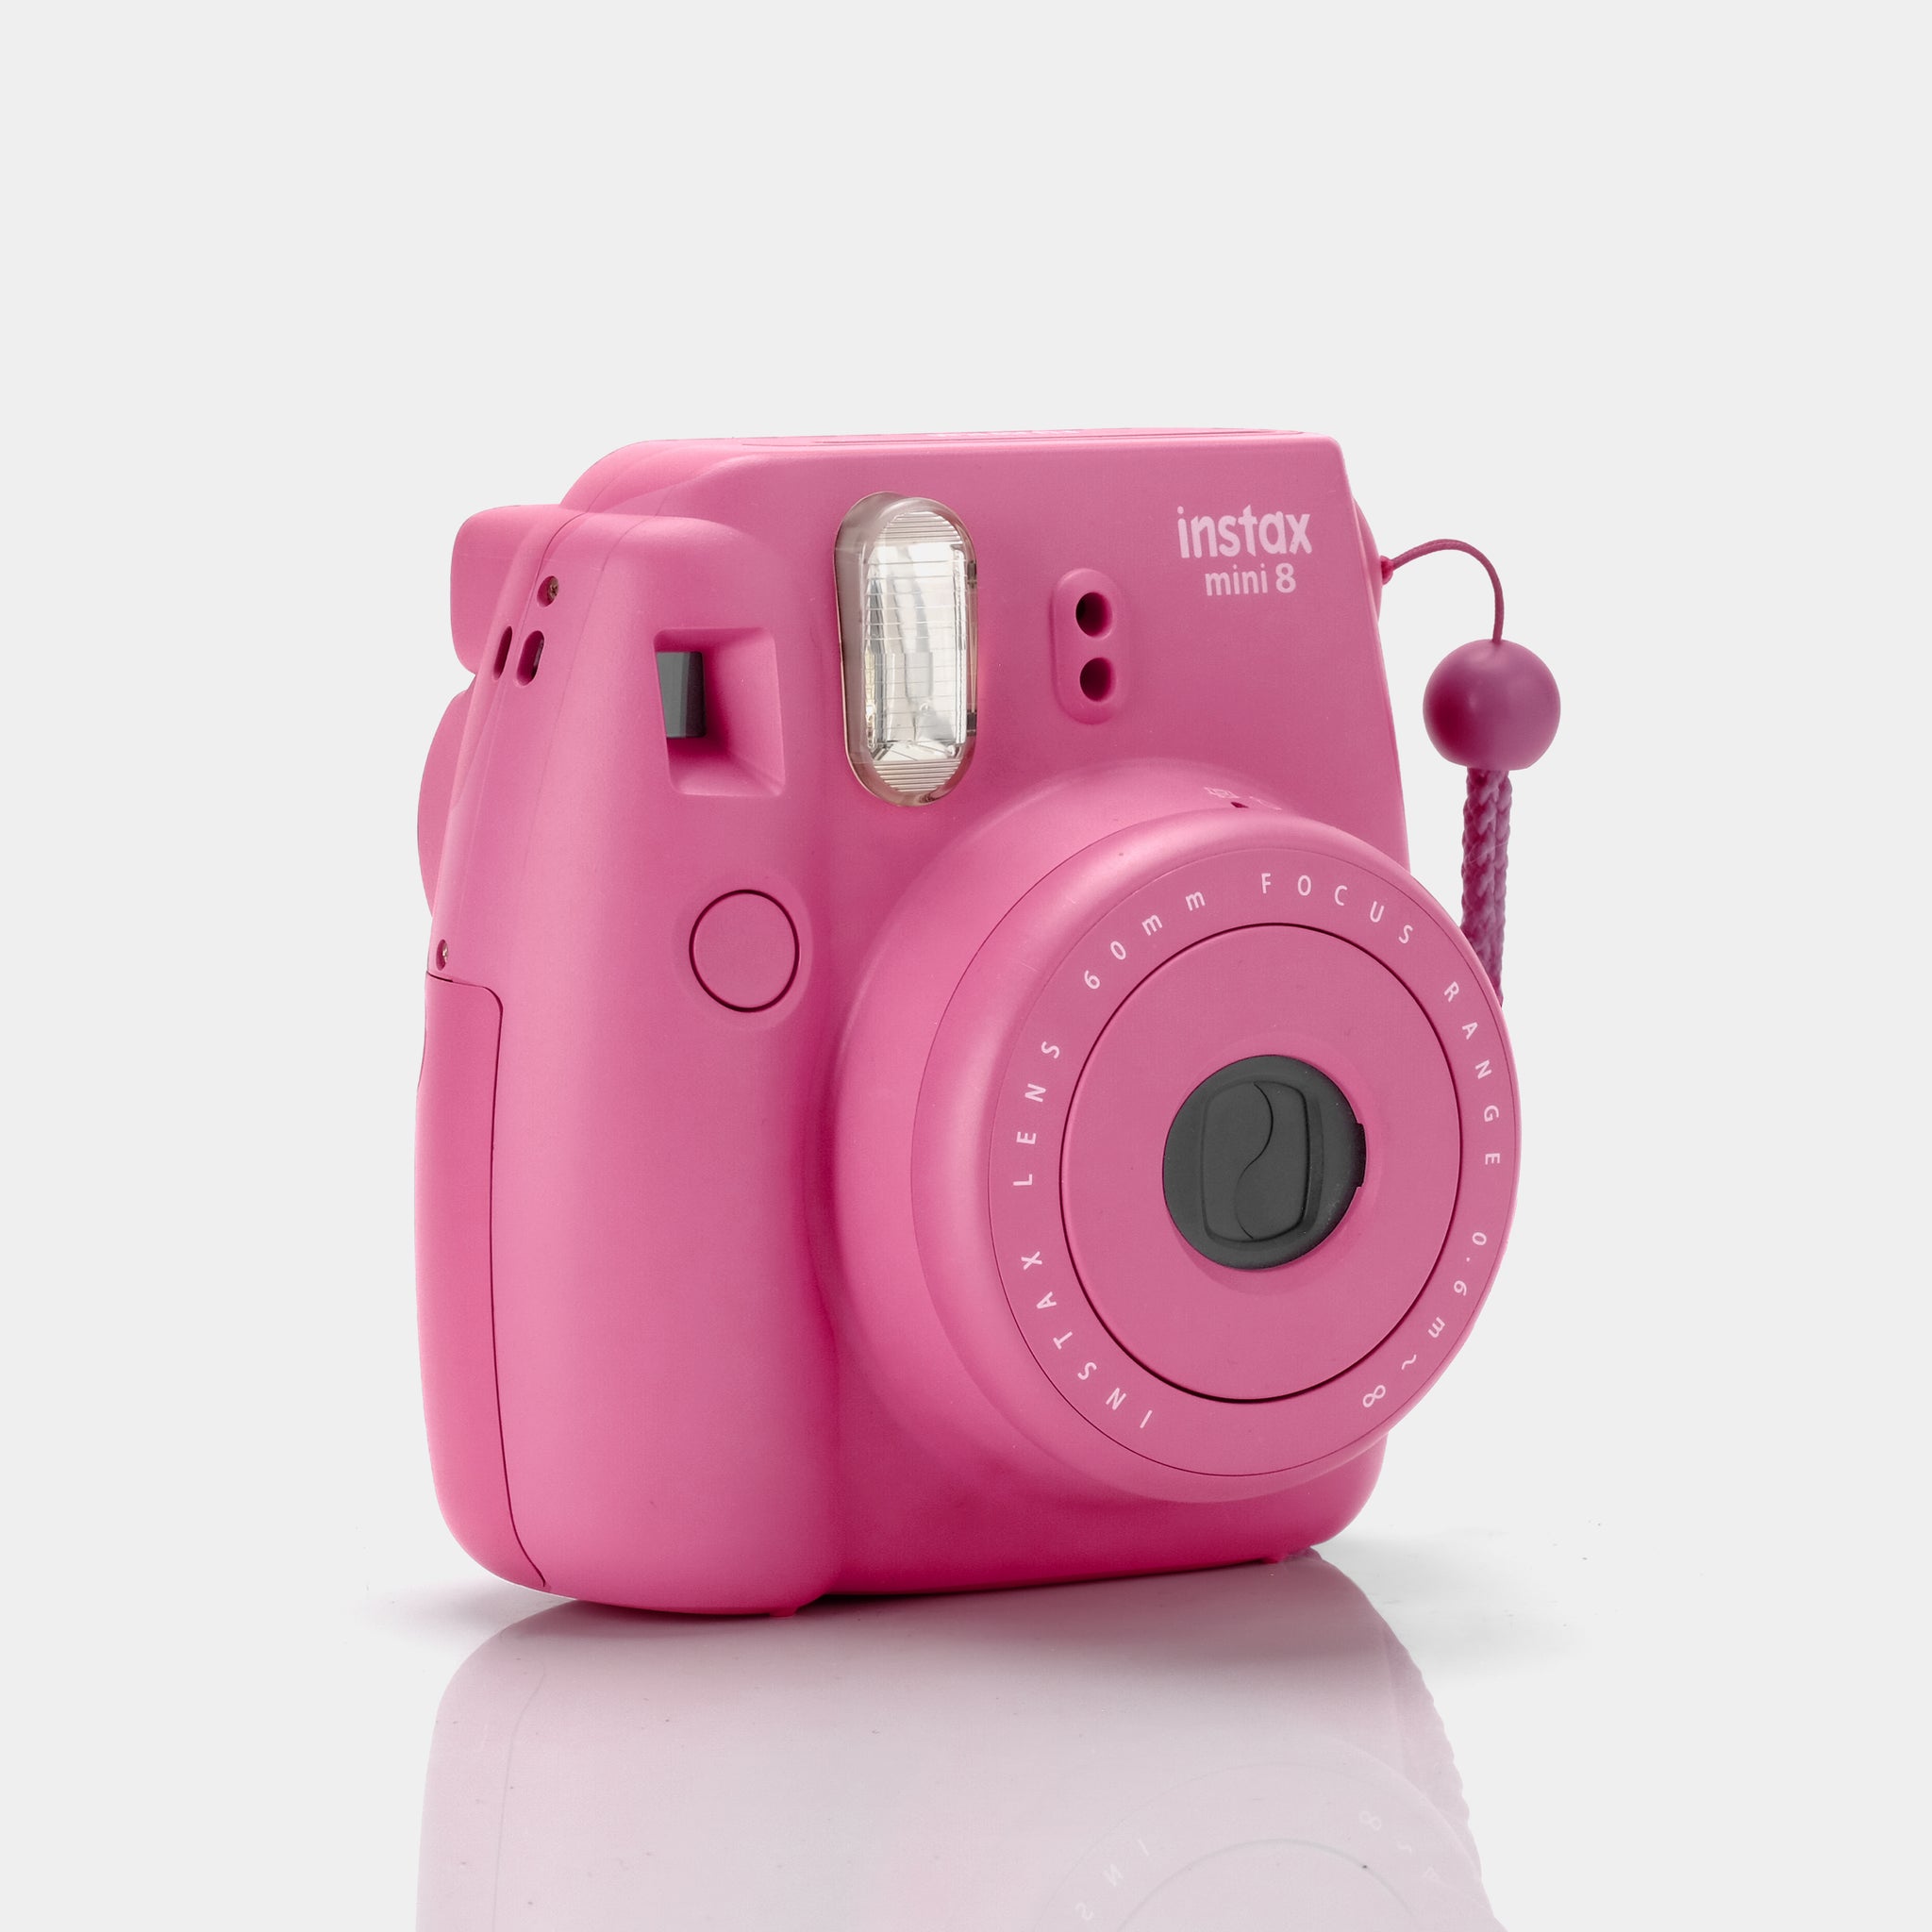 Fujifilm Instax Mini 8 Pink Instant Film Camera With Grey Bag - Refurb